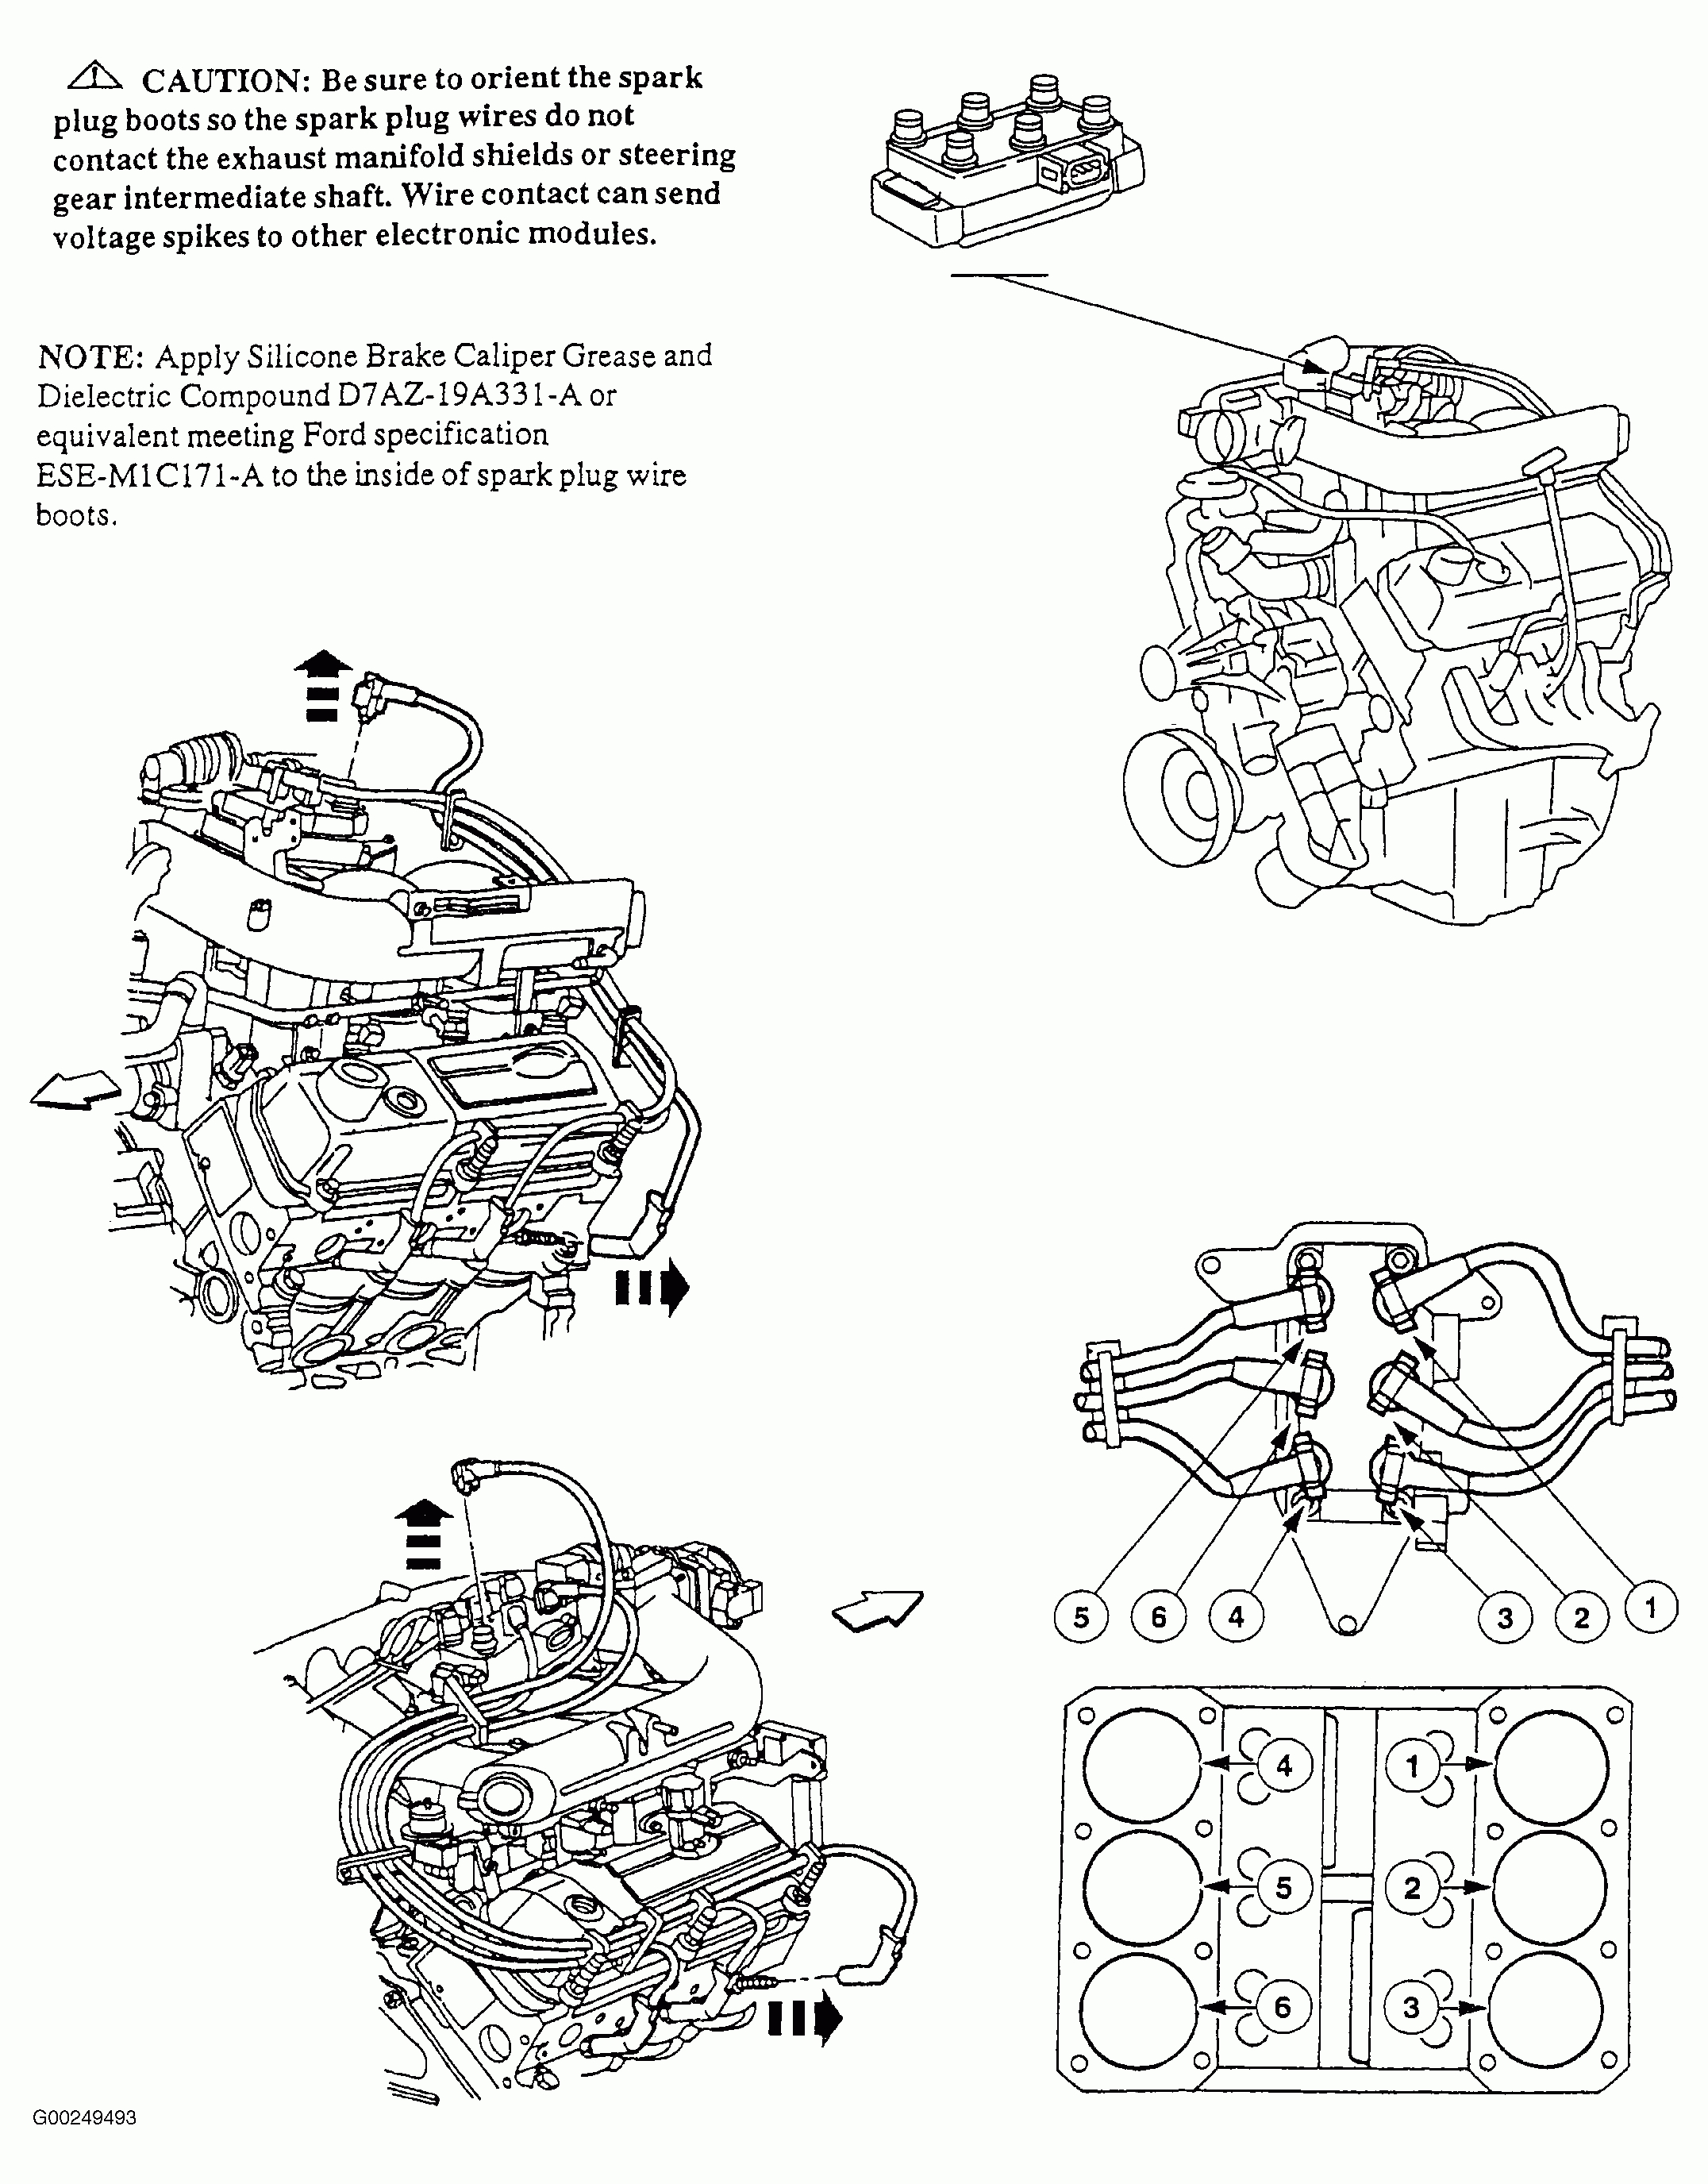 1999 Ford F 150 Spark Plug Wiring Diagram | Manual E-Books - 1997 Ford F150 Spark Plug Wiring Diagram